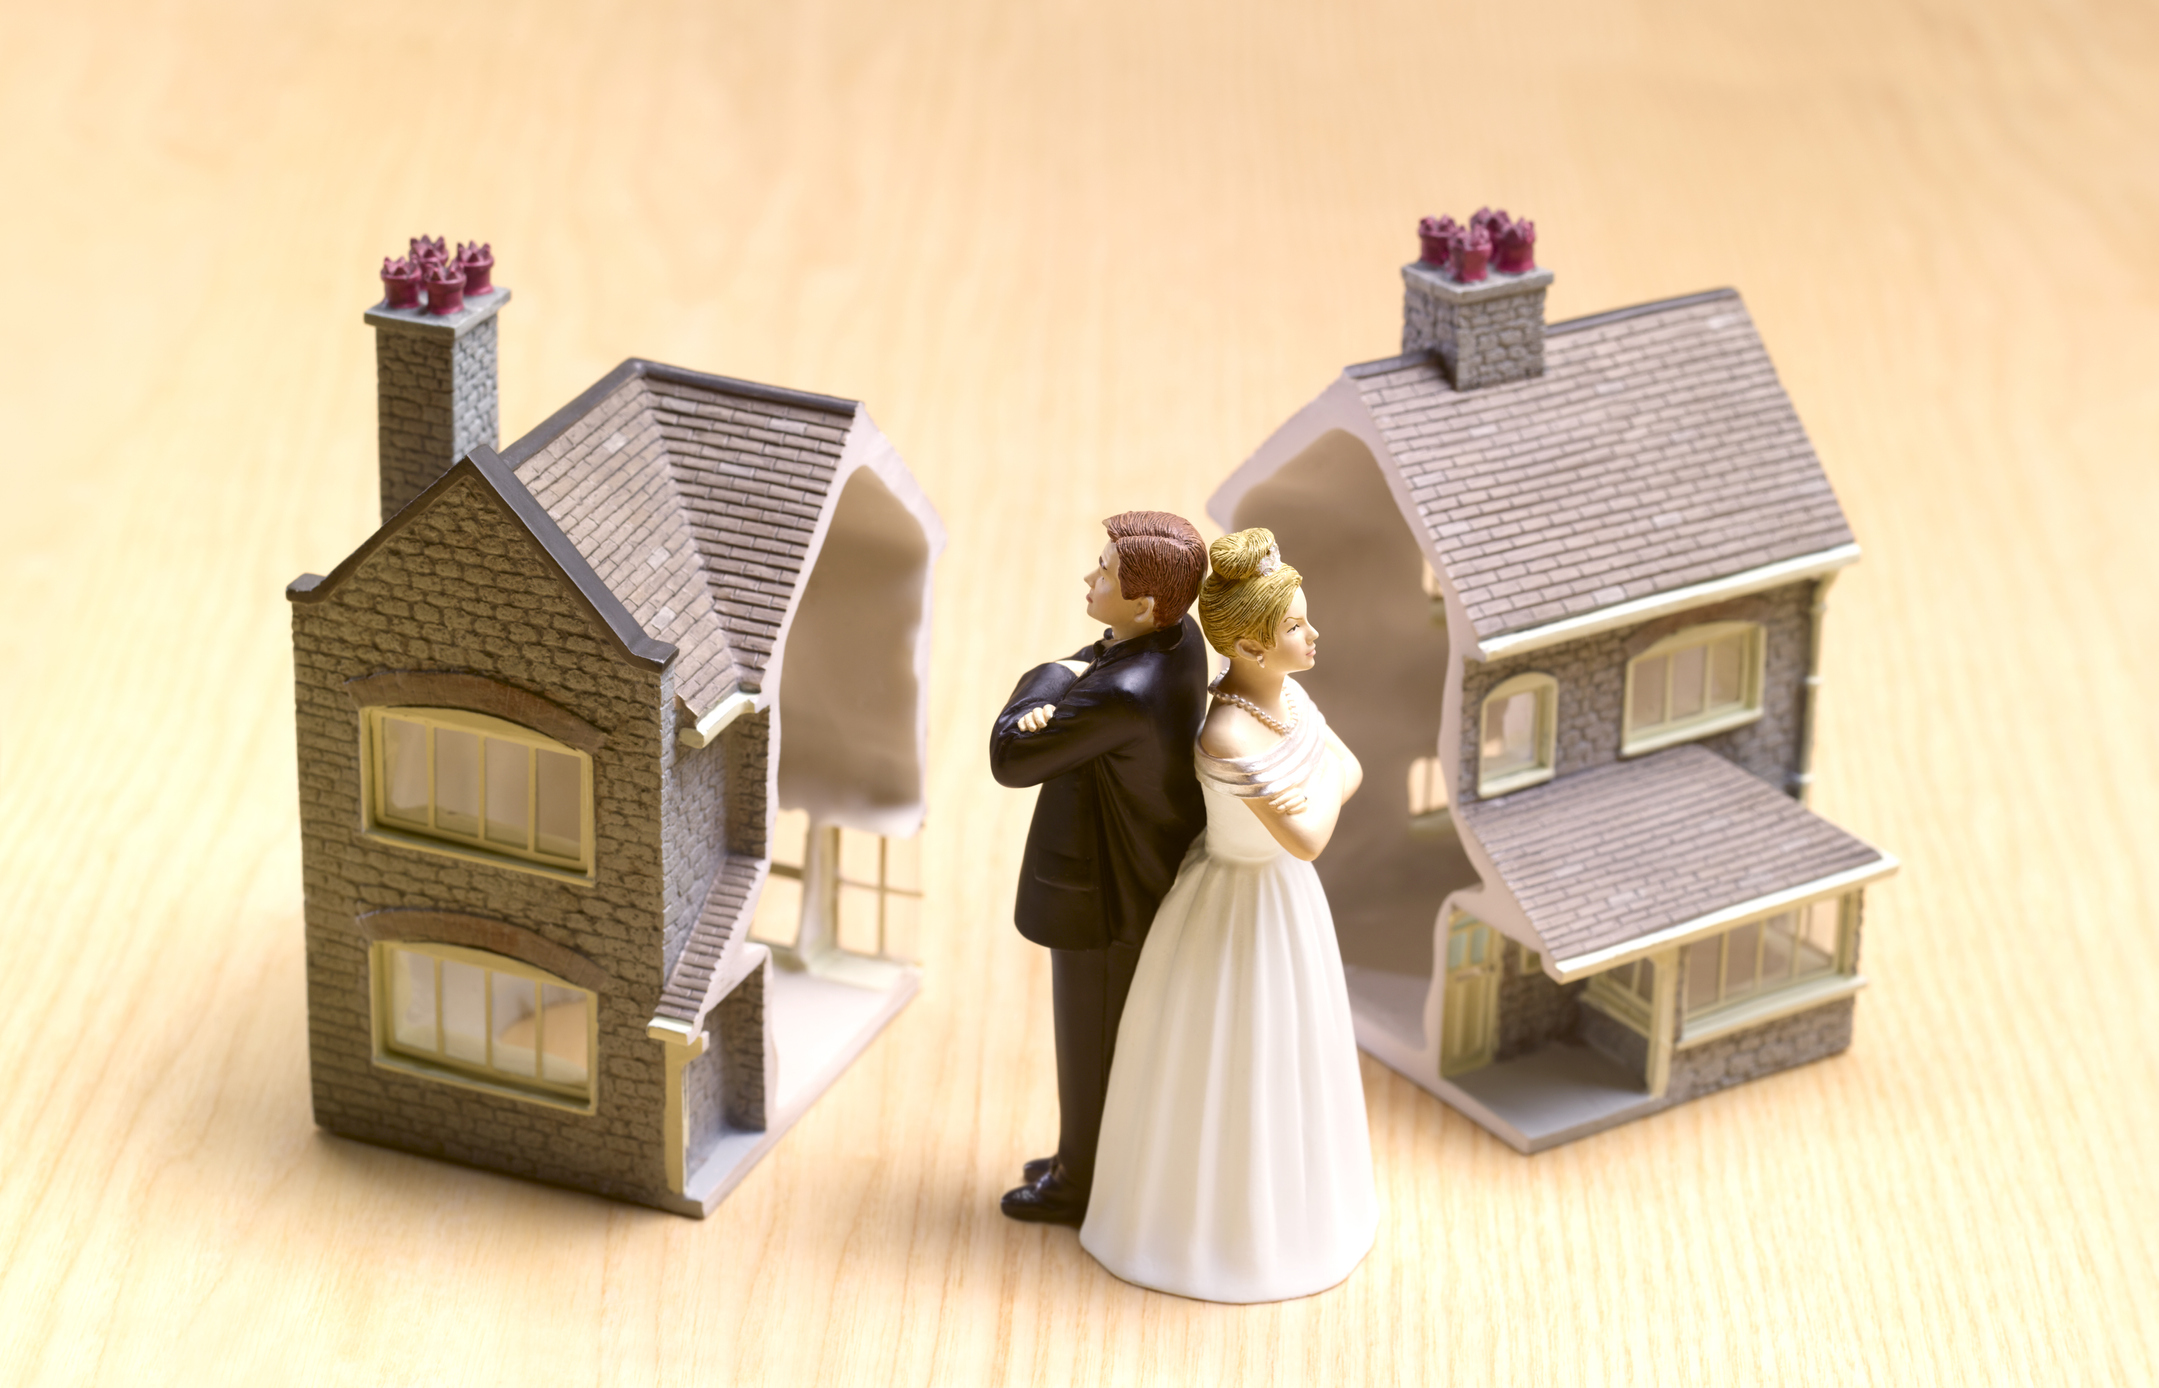 Divorce settlement house cut in half.